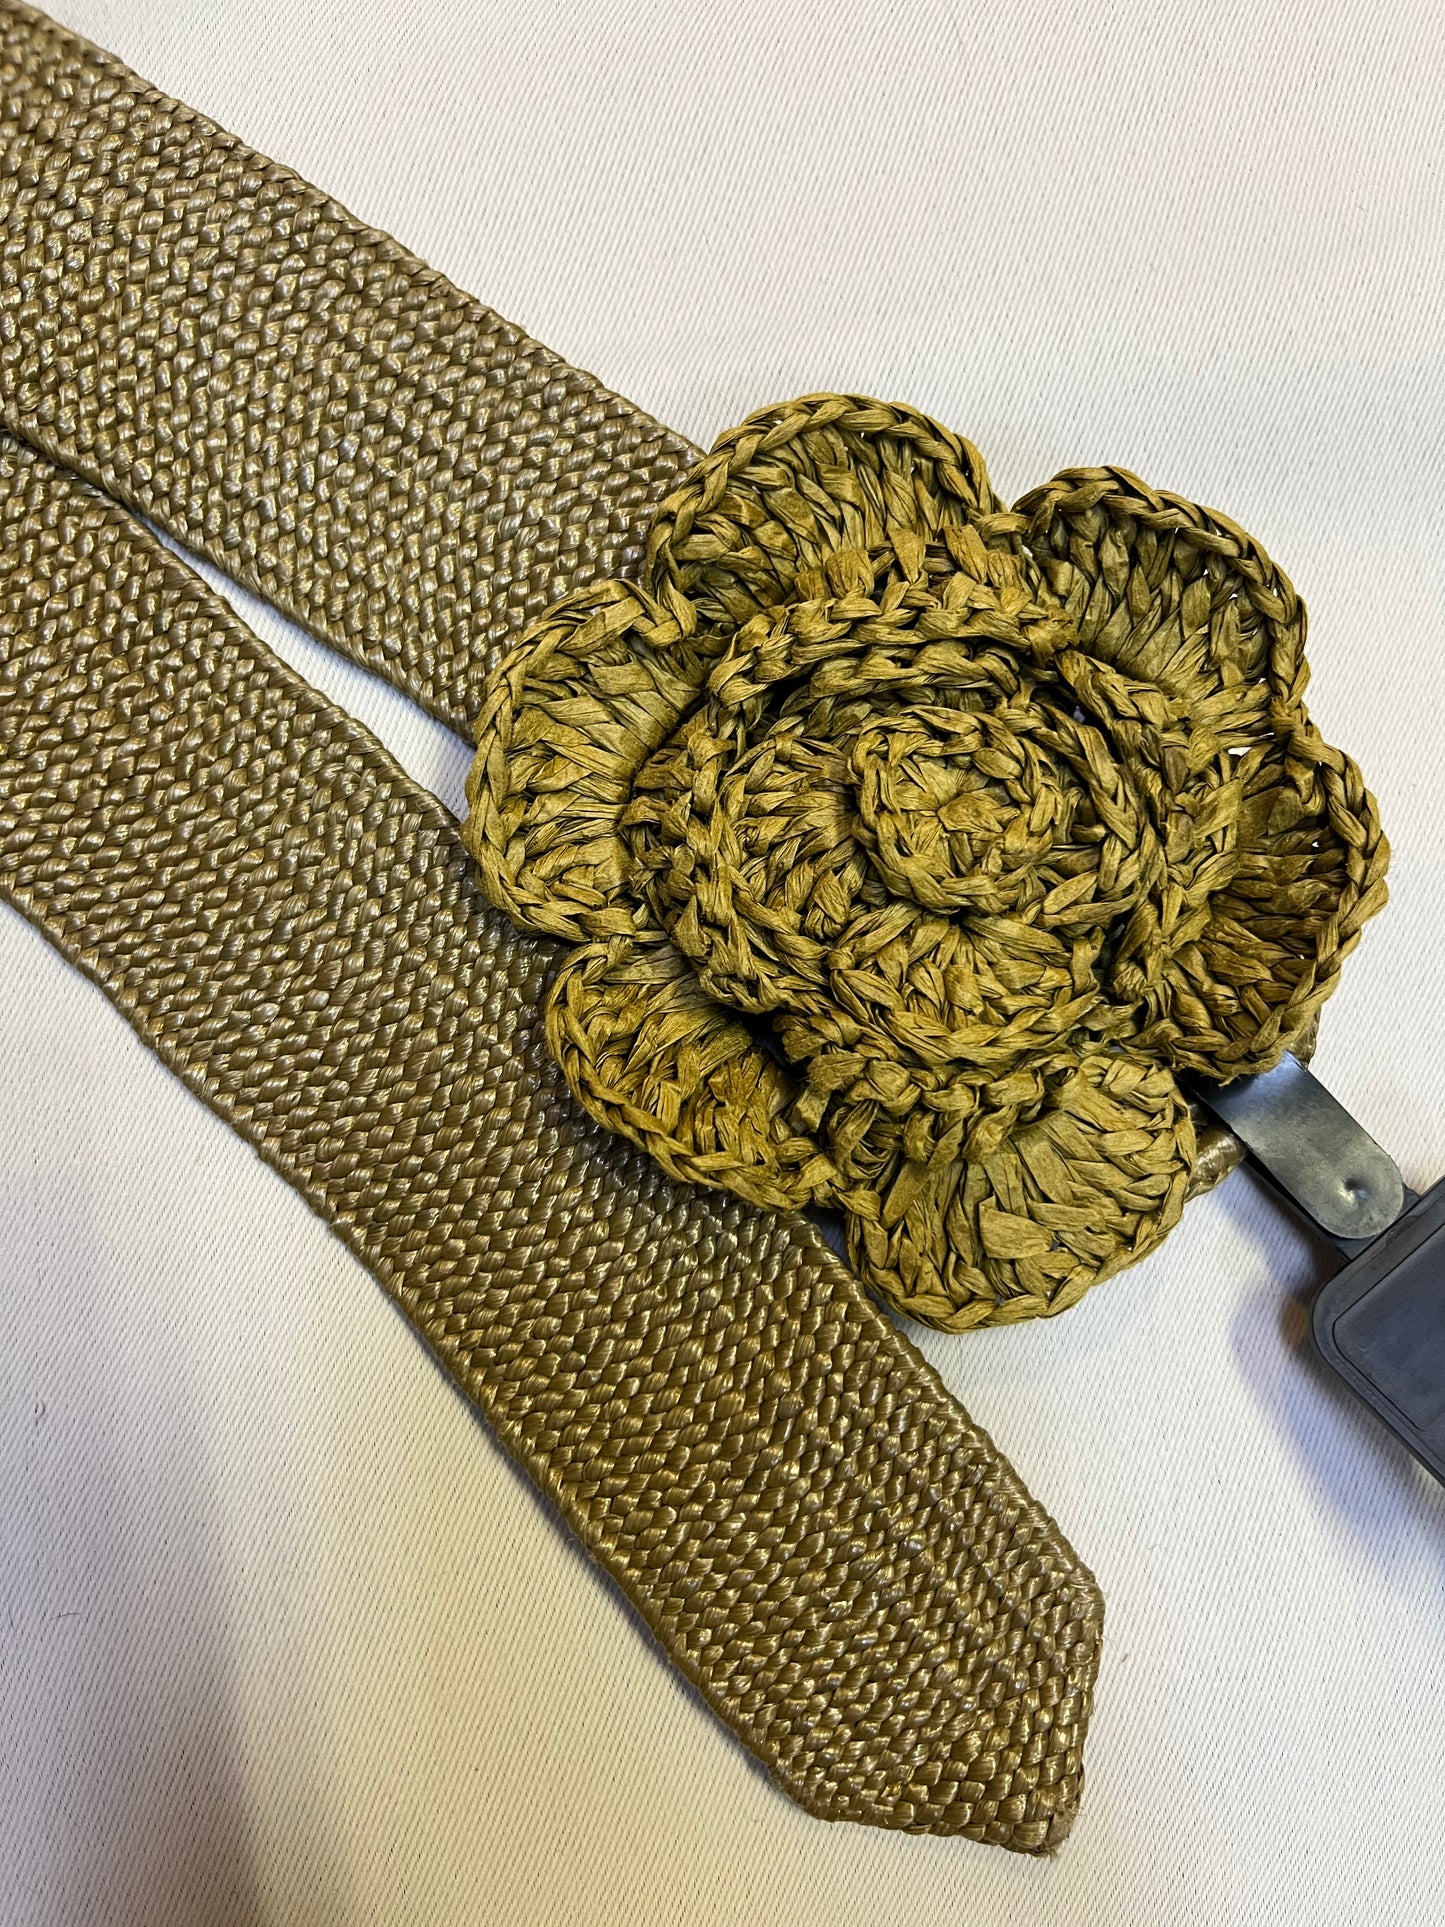 Vintage Miss Albright Elastic Tan Woven Belt with Artisan Looking Crochet Flower (M/L)